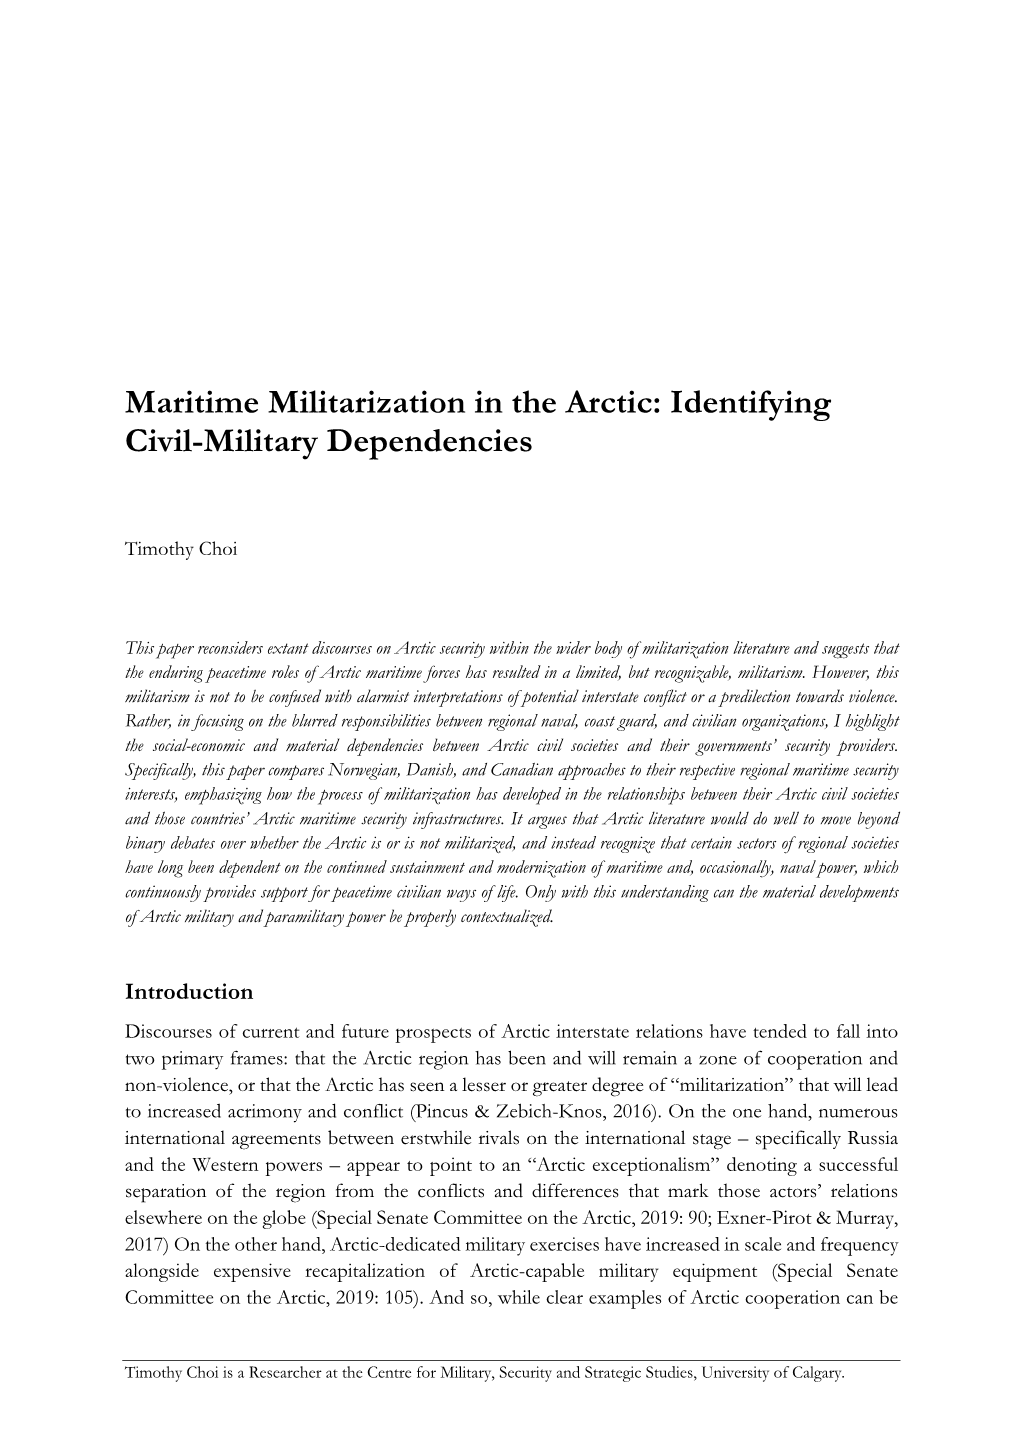 Maritime Militarization in the Arctic: Identifying Civil-Military Dependencies